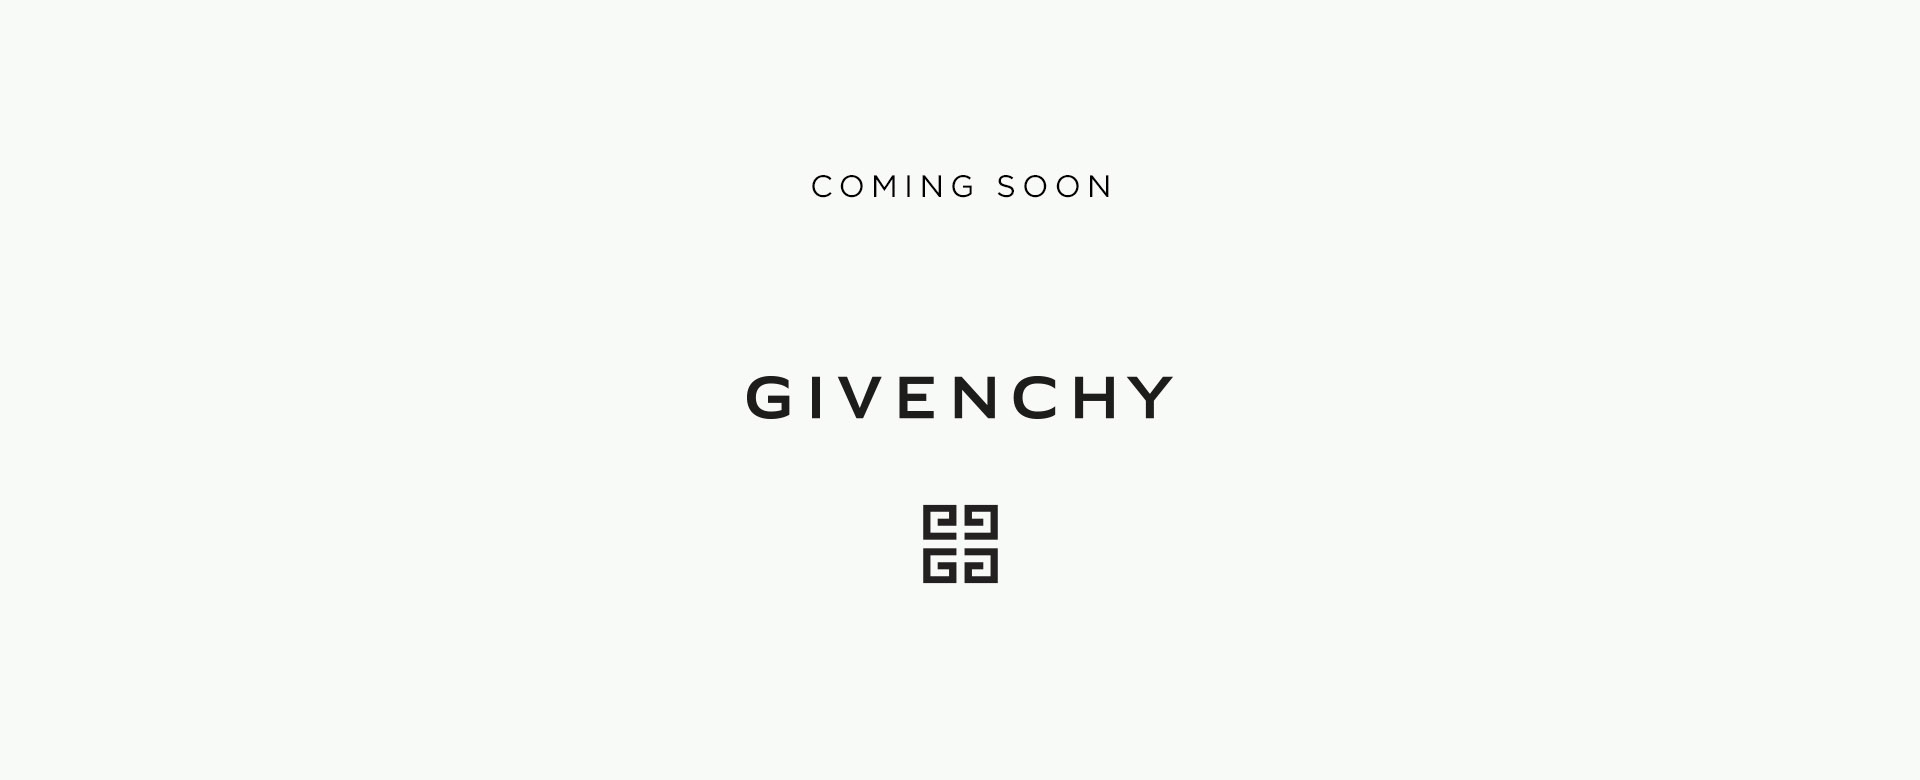 Givenchy arrive bientôt sur Kids around